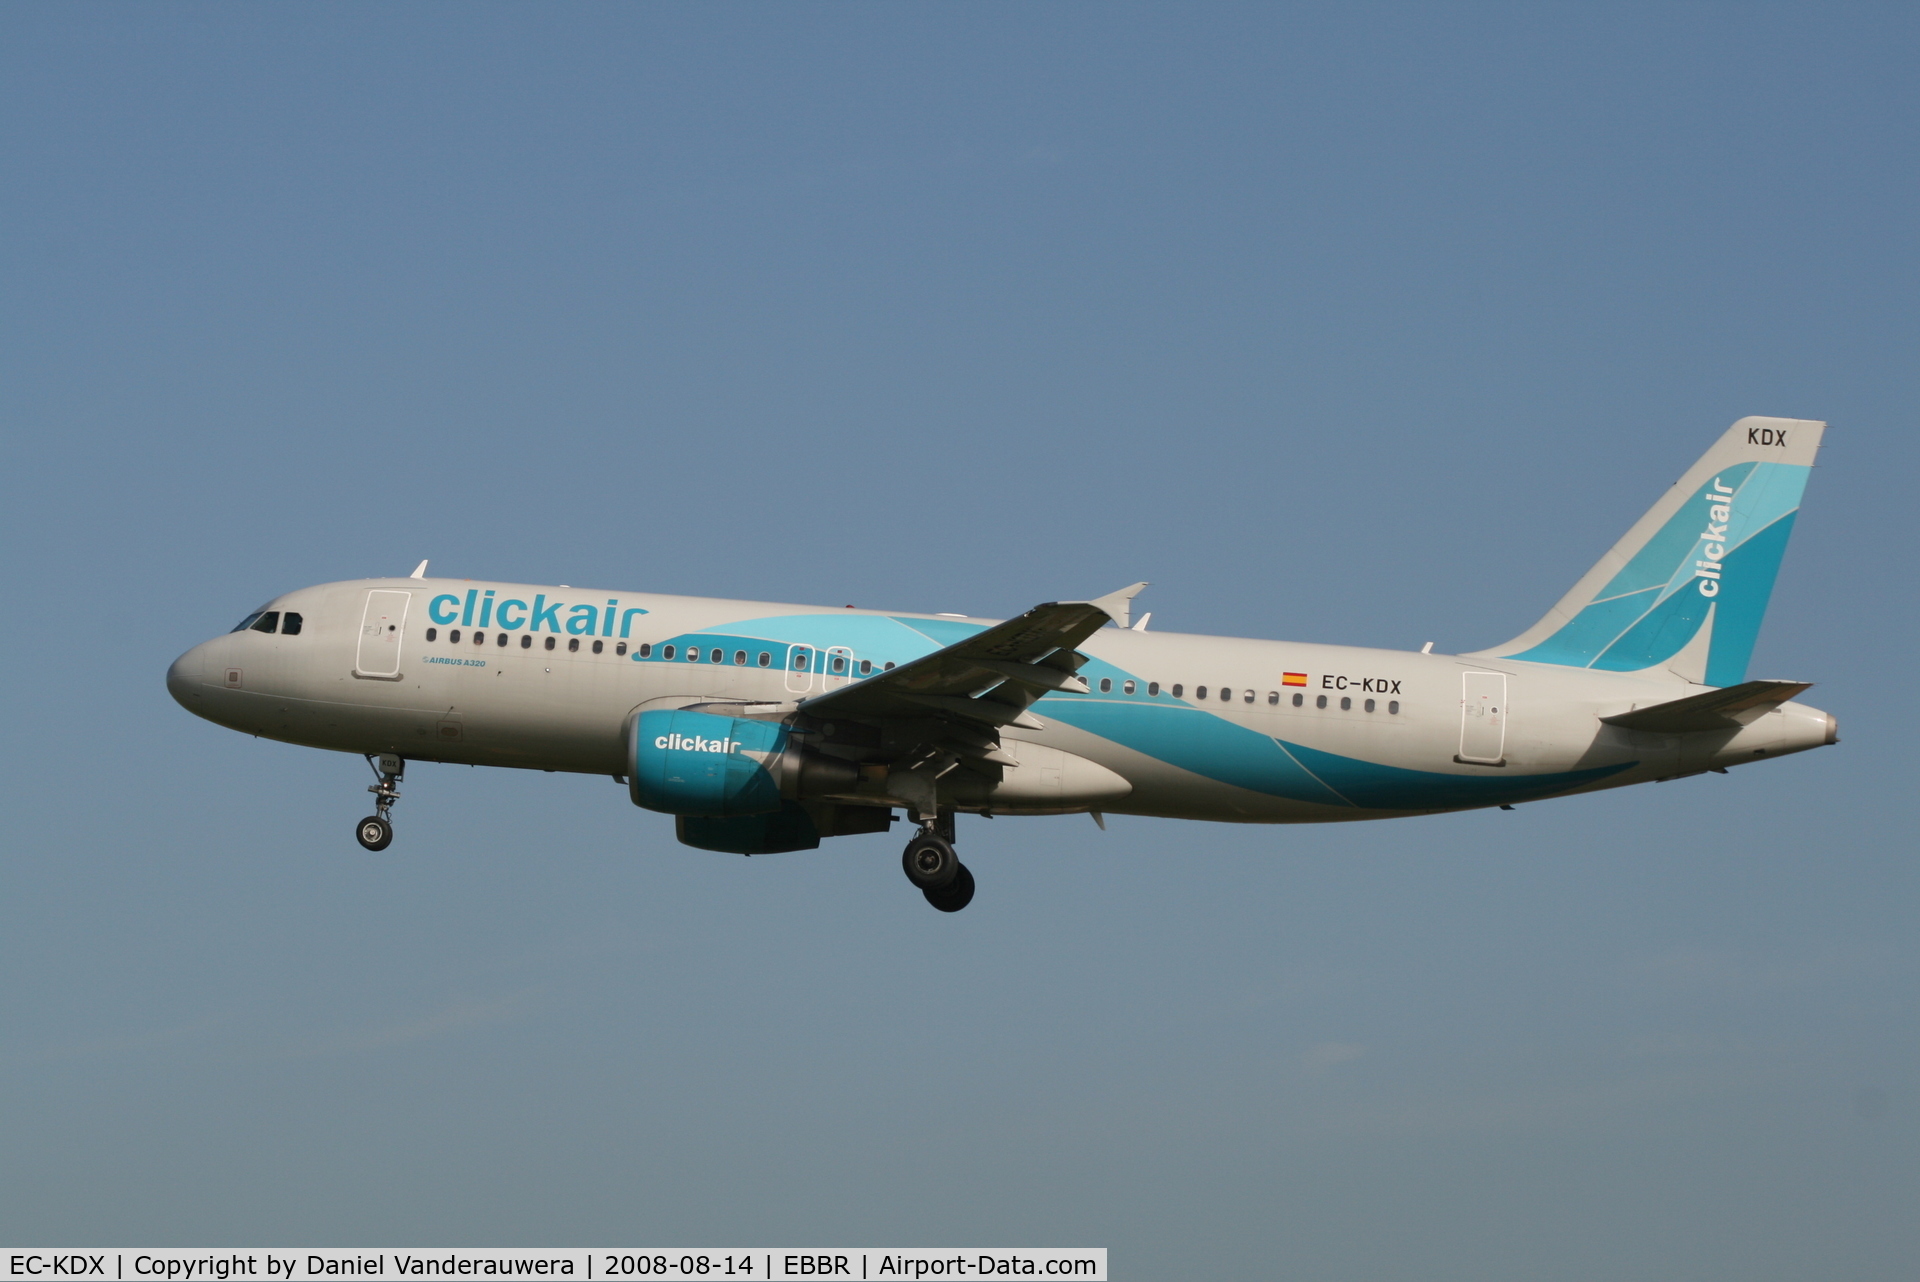 EC-KDX, 2007 Airbus A320-216 C/N 3151, flight XG1241 is descending to rwy 25L